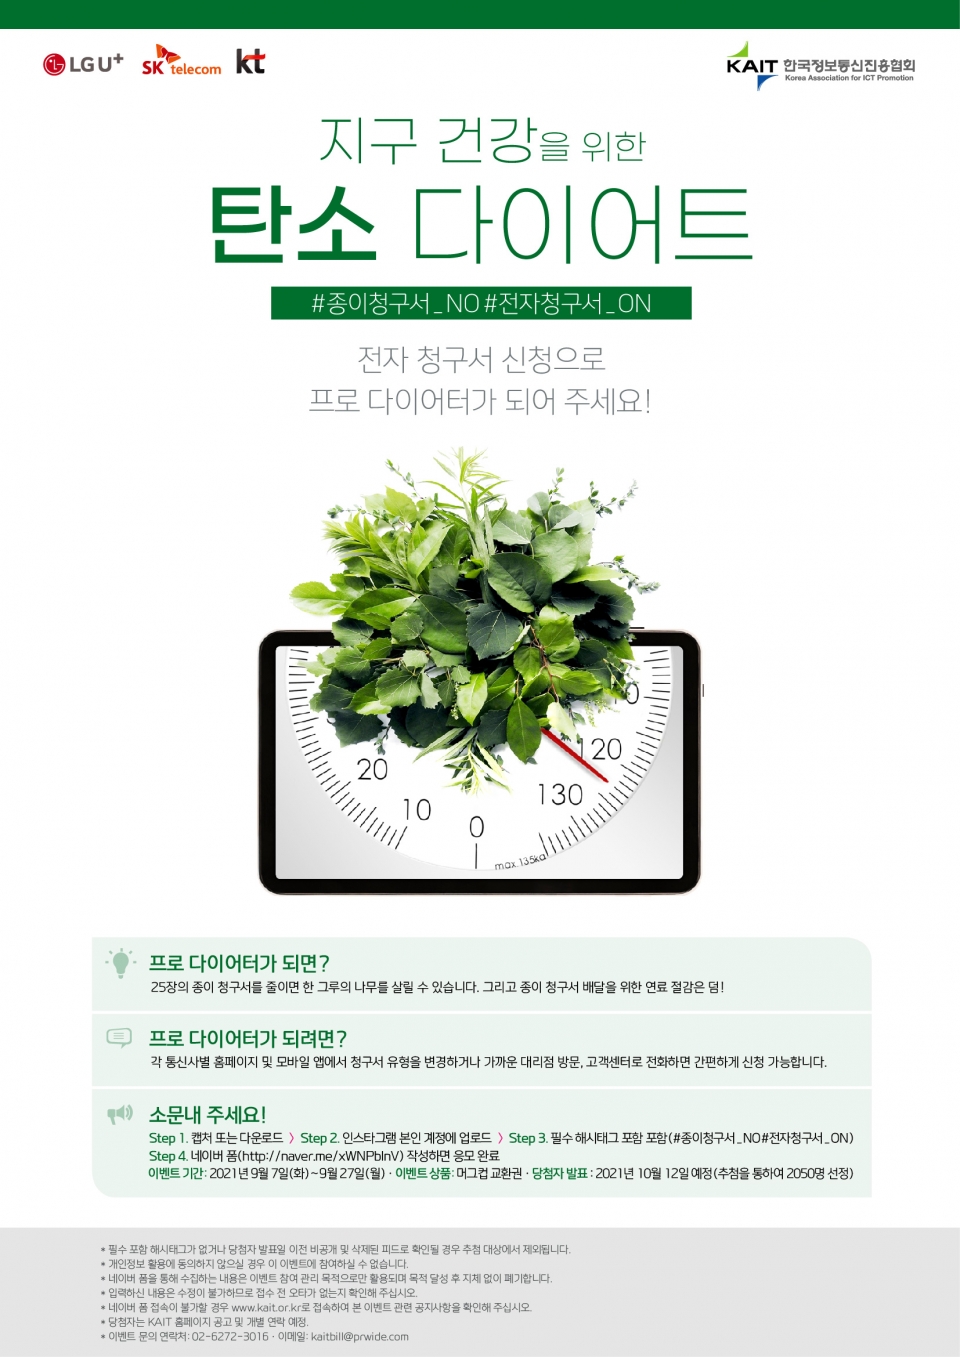 KT·SKT·LGU+ 등 국내 이동통신 3사 한국정보통신진흥협회는 종이청구서를 전자청구서 사용을 확대하는 '지구 건강 탄소 다이어트 공동 캠페인'을 진행한다.